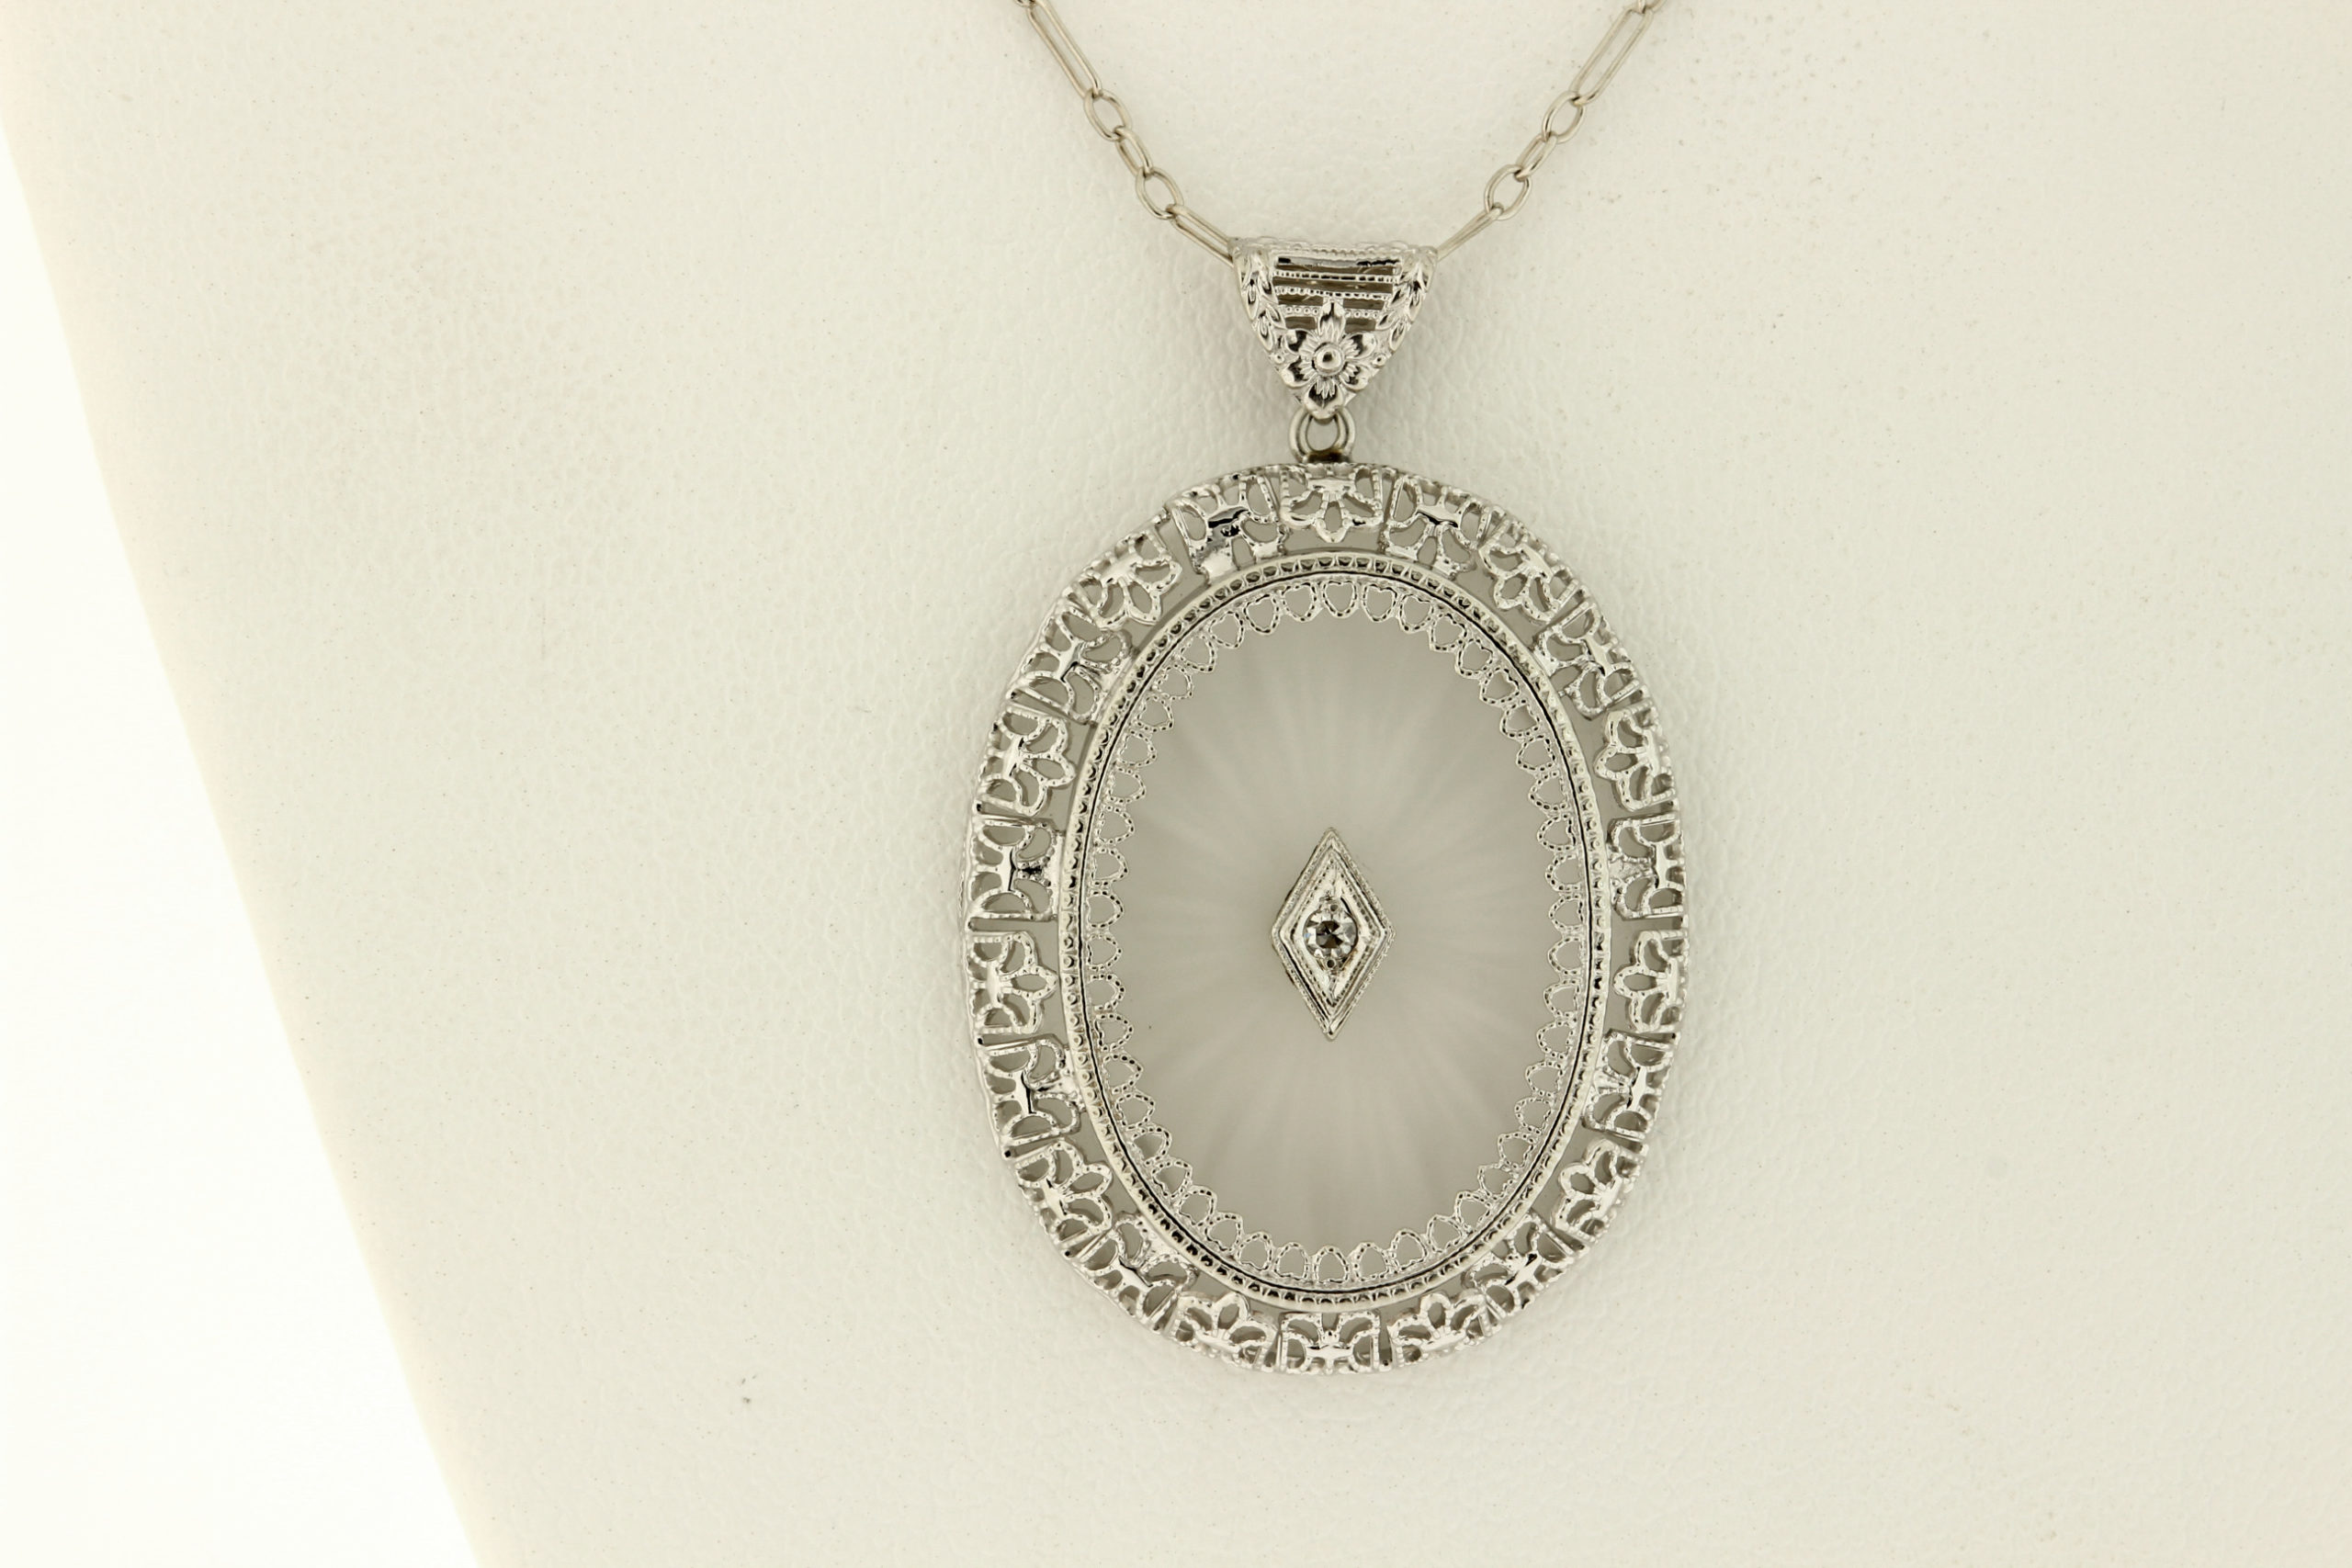 Sold at Auction: Art Deco Camphor Glass Necklace